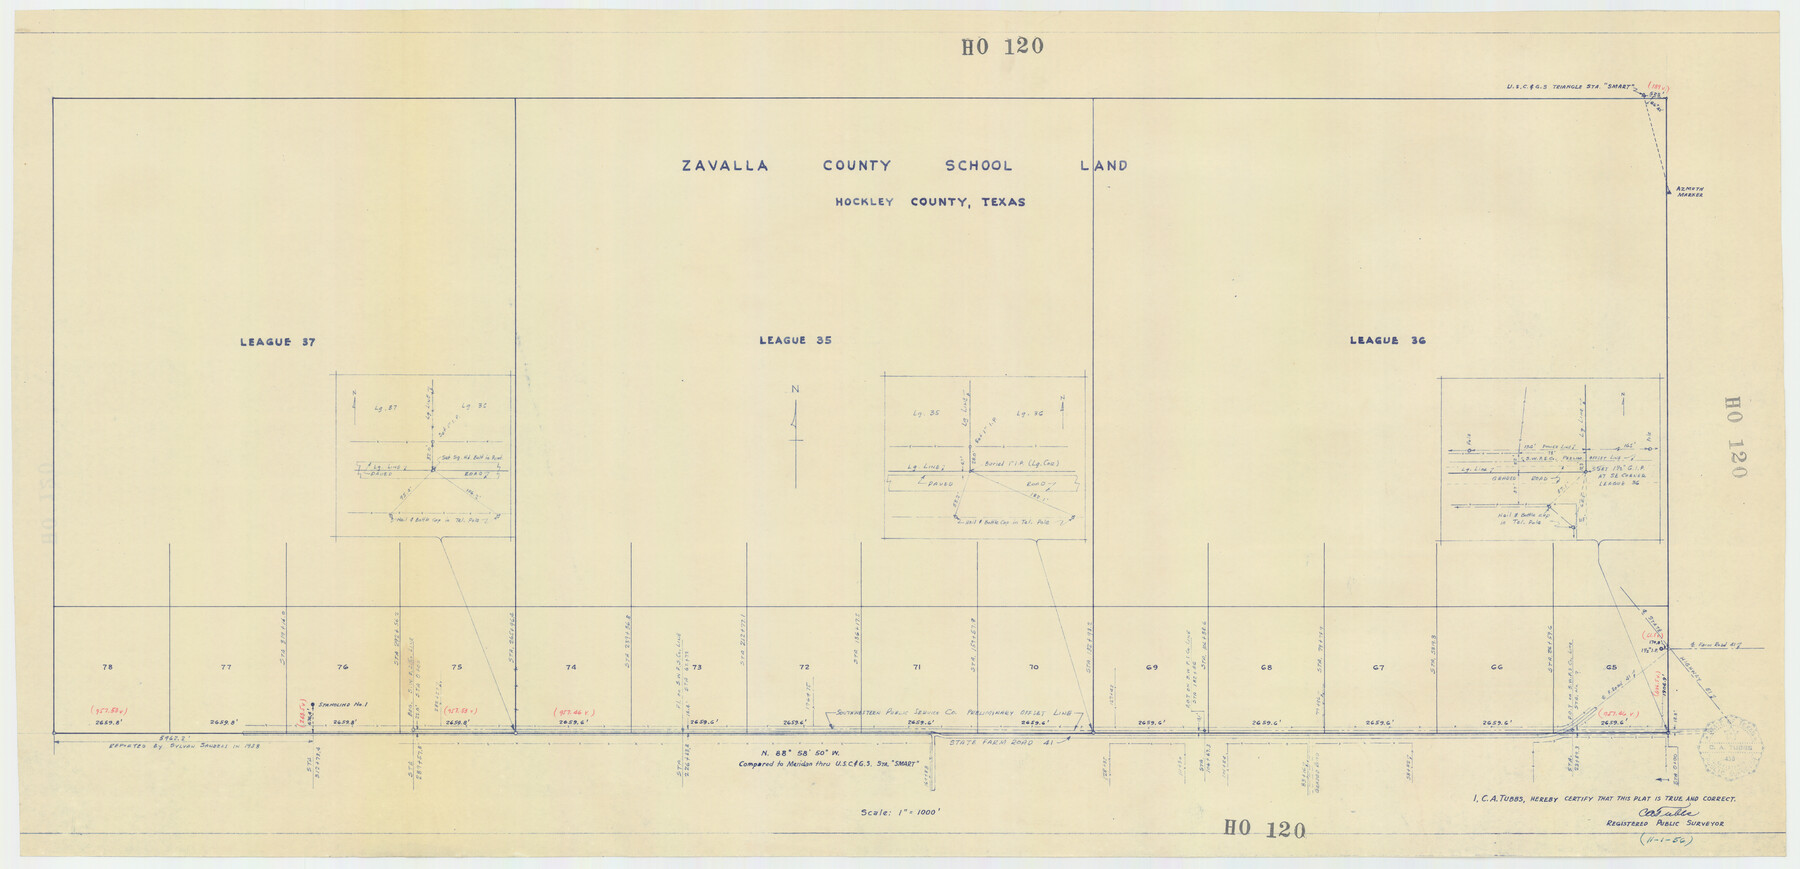 92254, Zavalla County School Land Hockley County, Texas, Twichell Survey Records